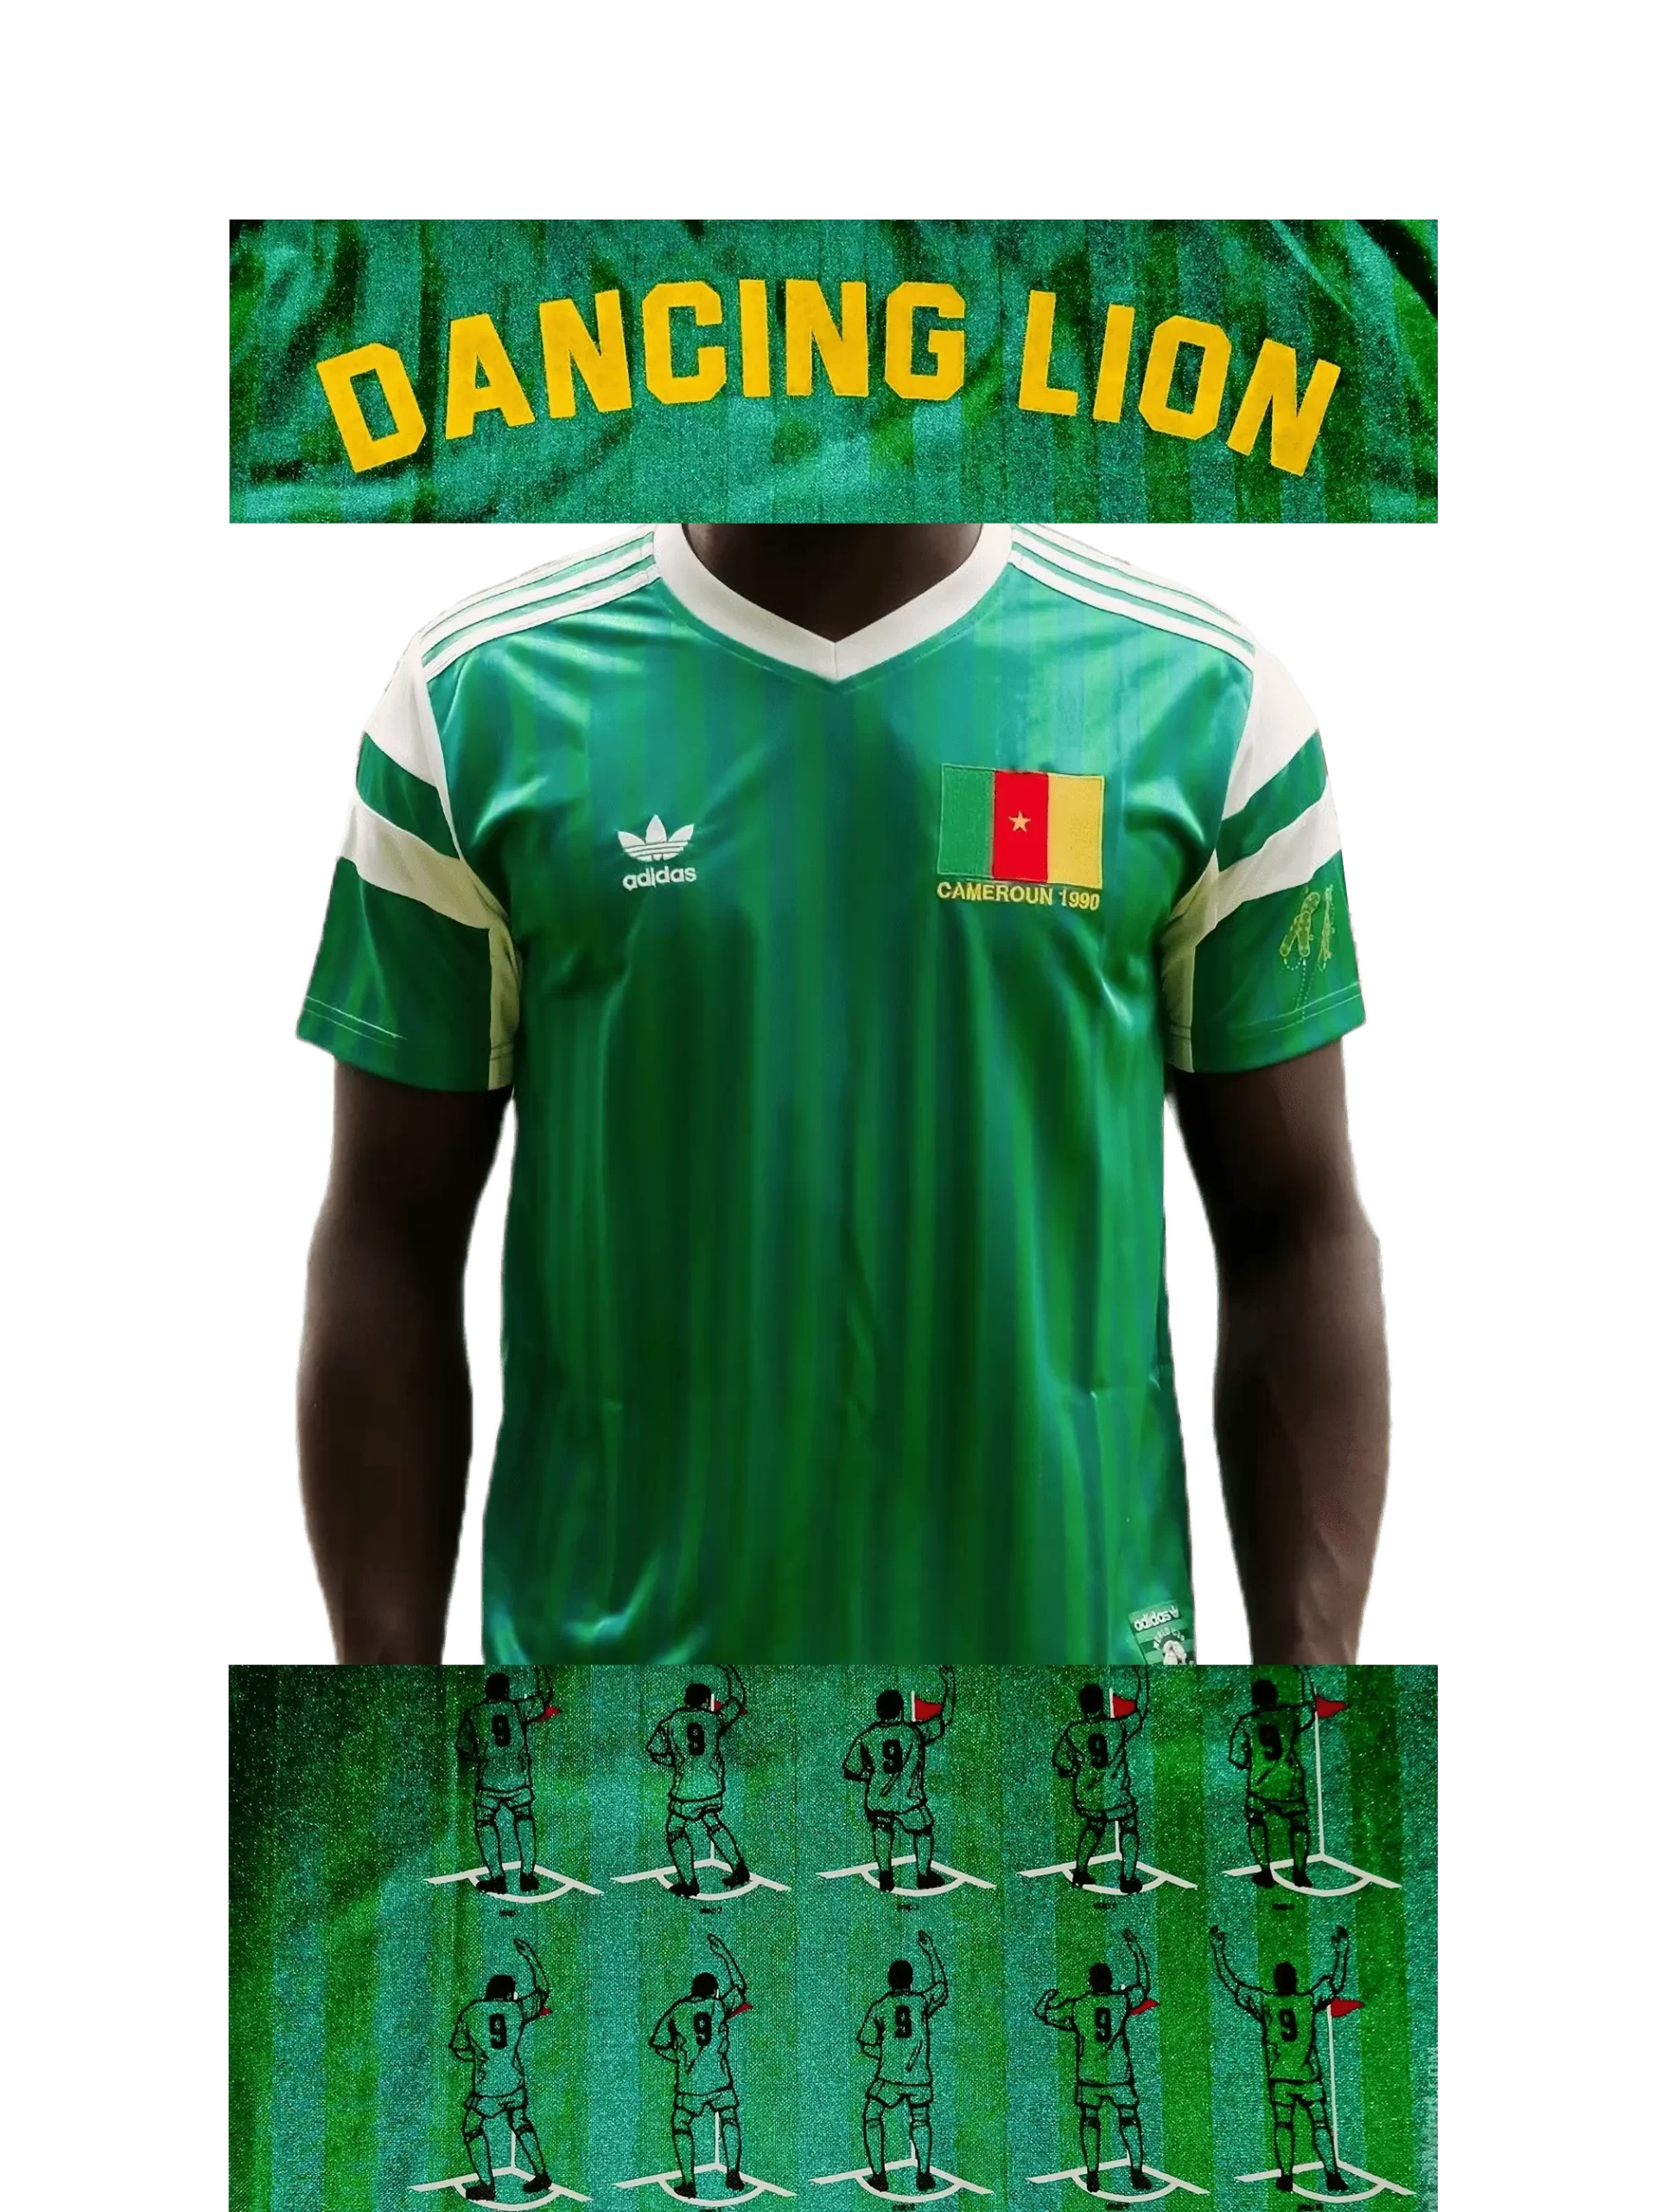 Men's 2006 Cameroon '90 Dancing Lion Jersey by Adidas: Intelligent (EnLawded.com file #lmchk62092ip2y123312kg9st)